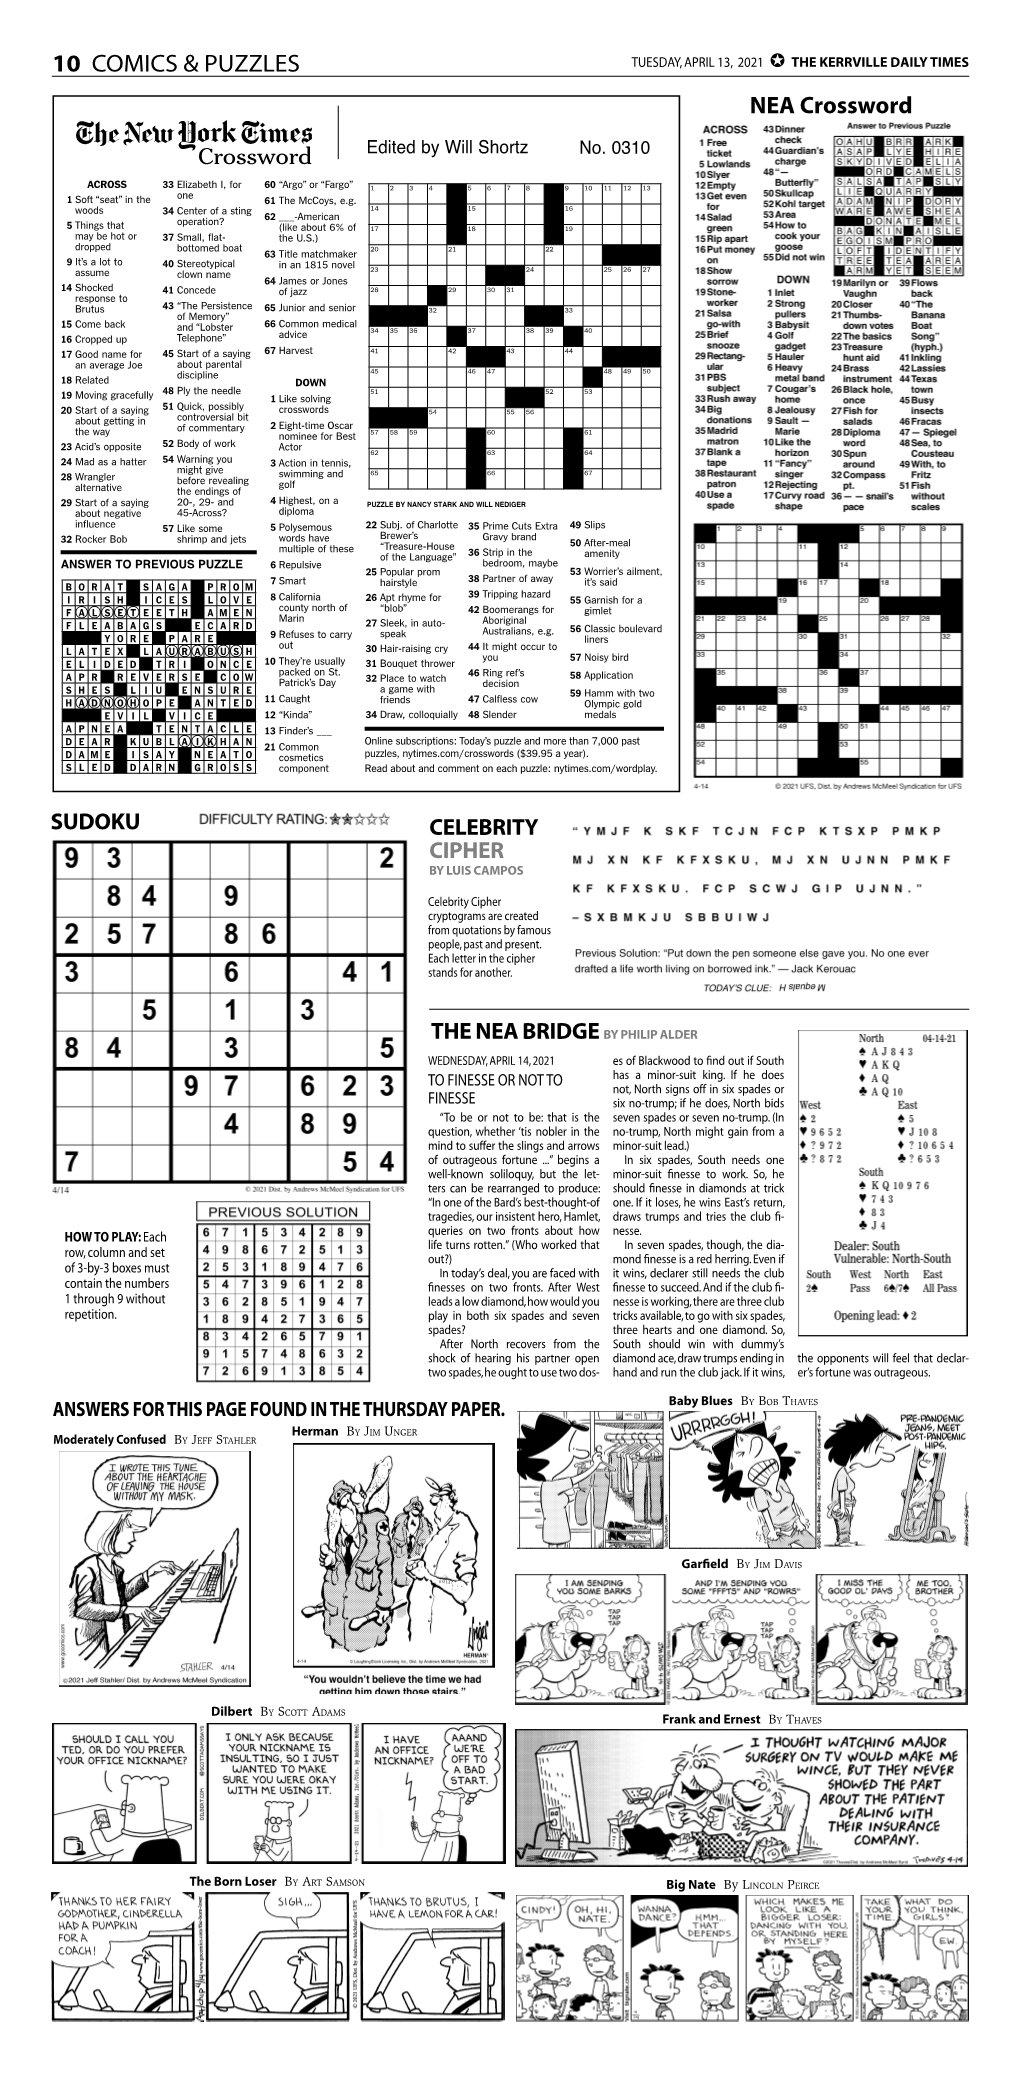 Crossword 10 COMICS & PUZZLES